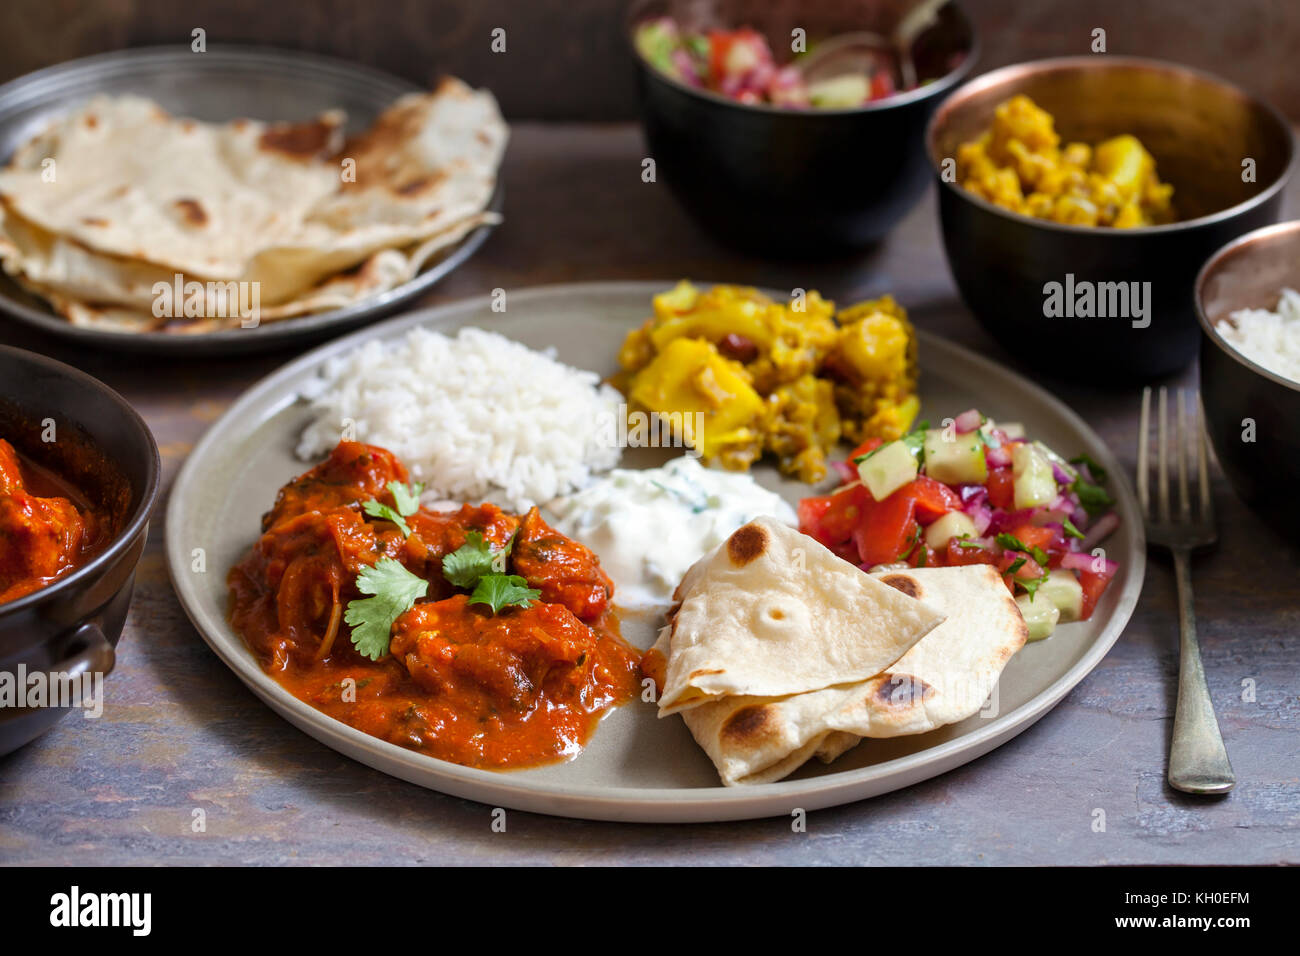 Indian meal with chicken tikka masala, aloo gobi, raita, flatbreads and ...